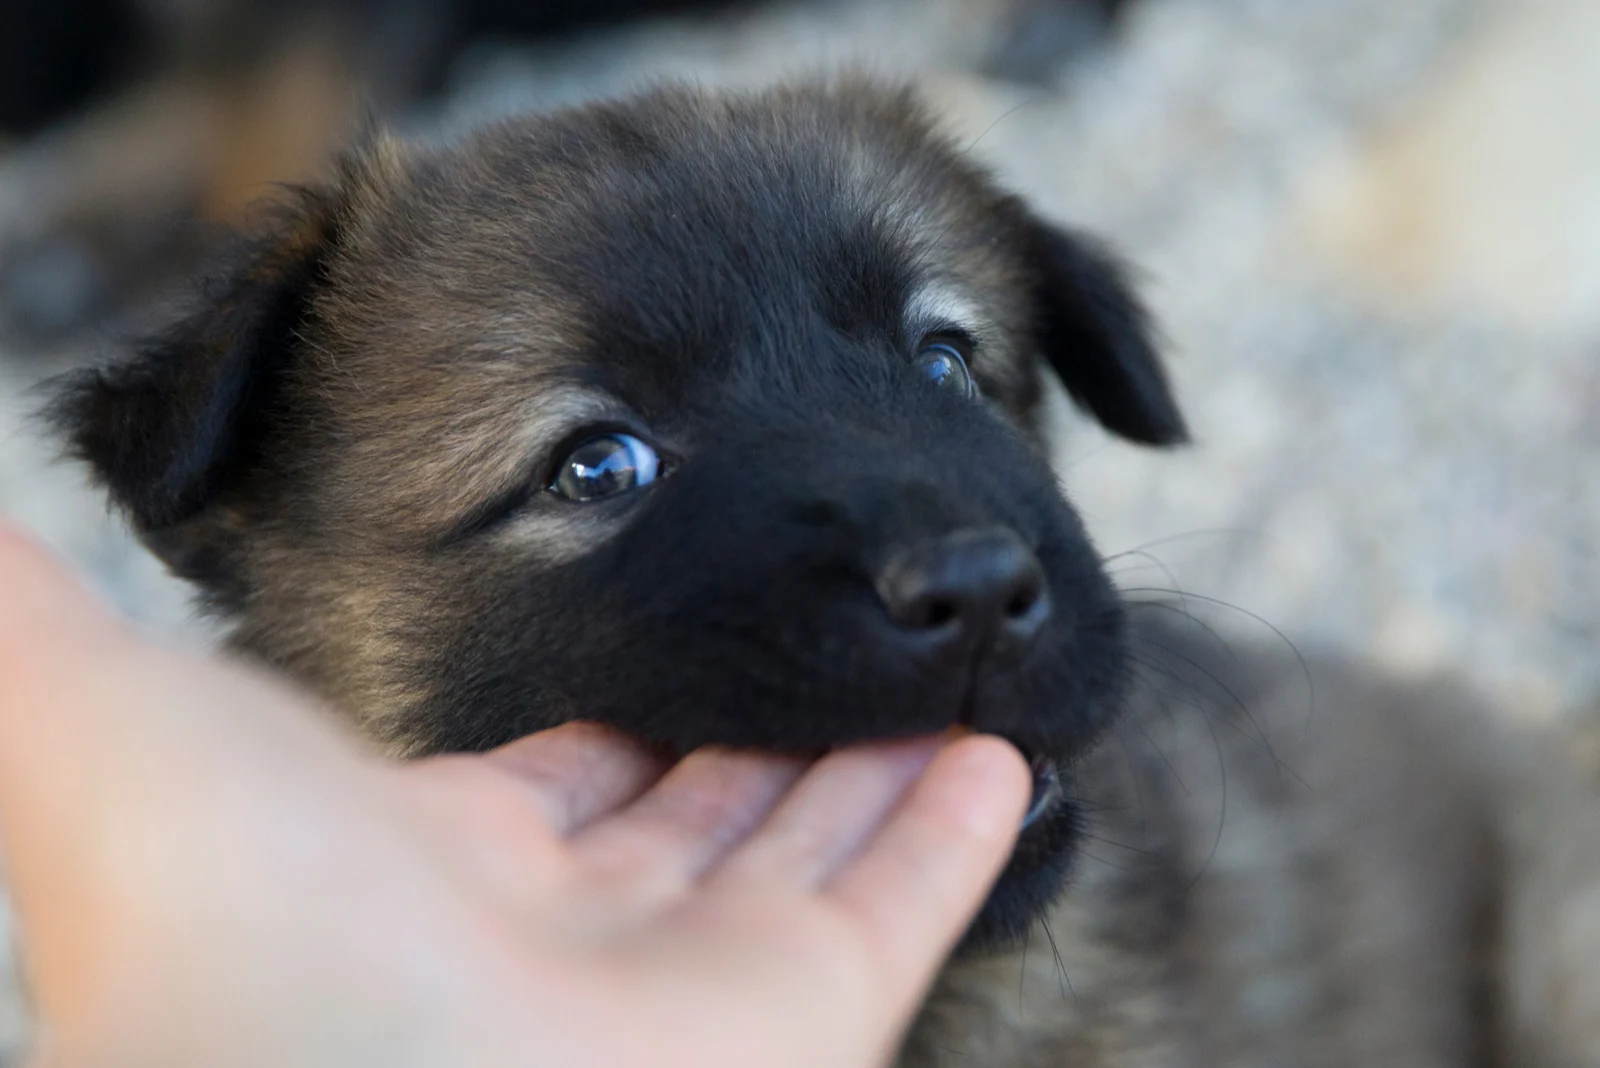 Sweet dog puppy nibble human hand